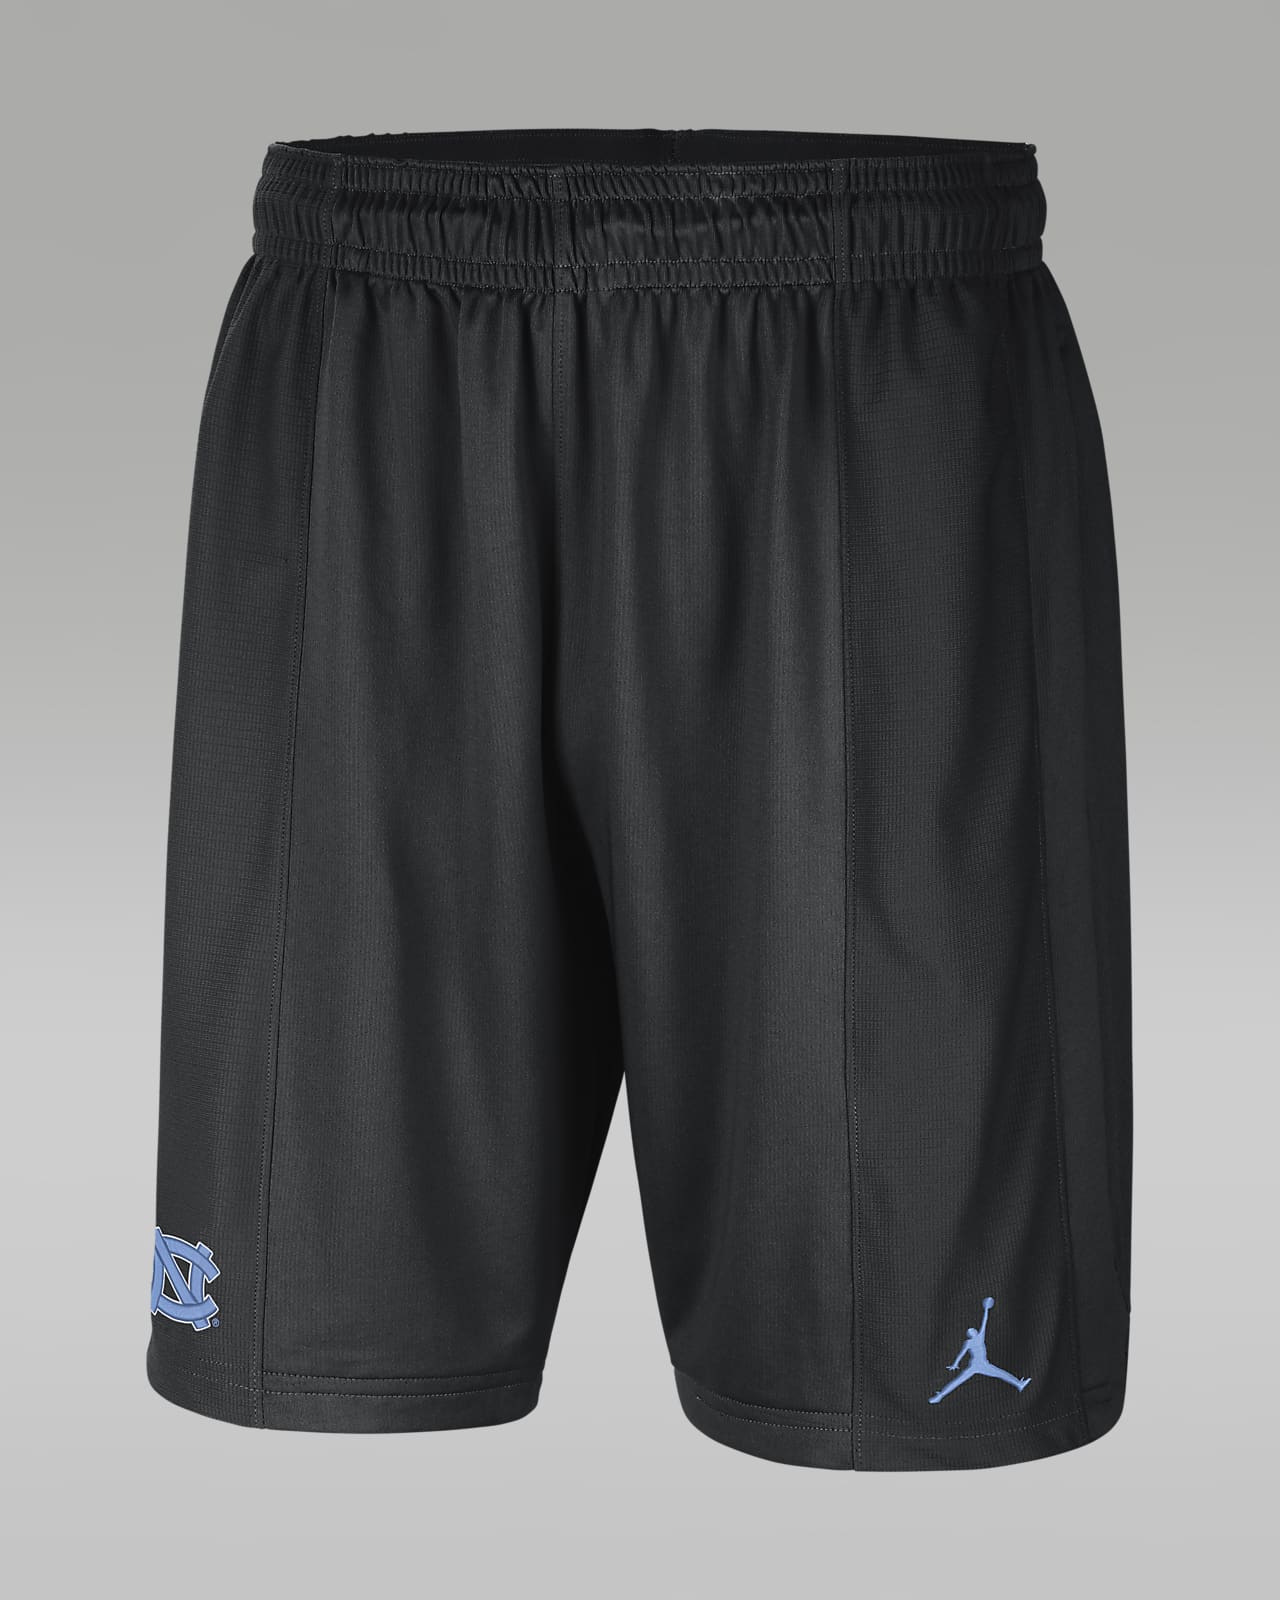 Jordan College (UNC) Men's Knit Football Shorts